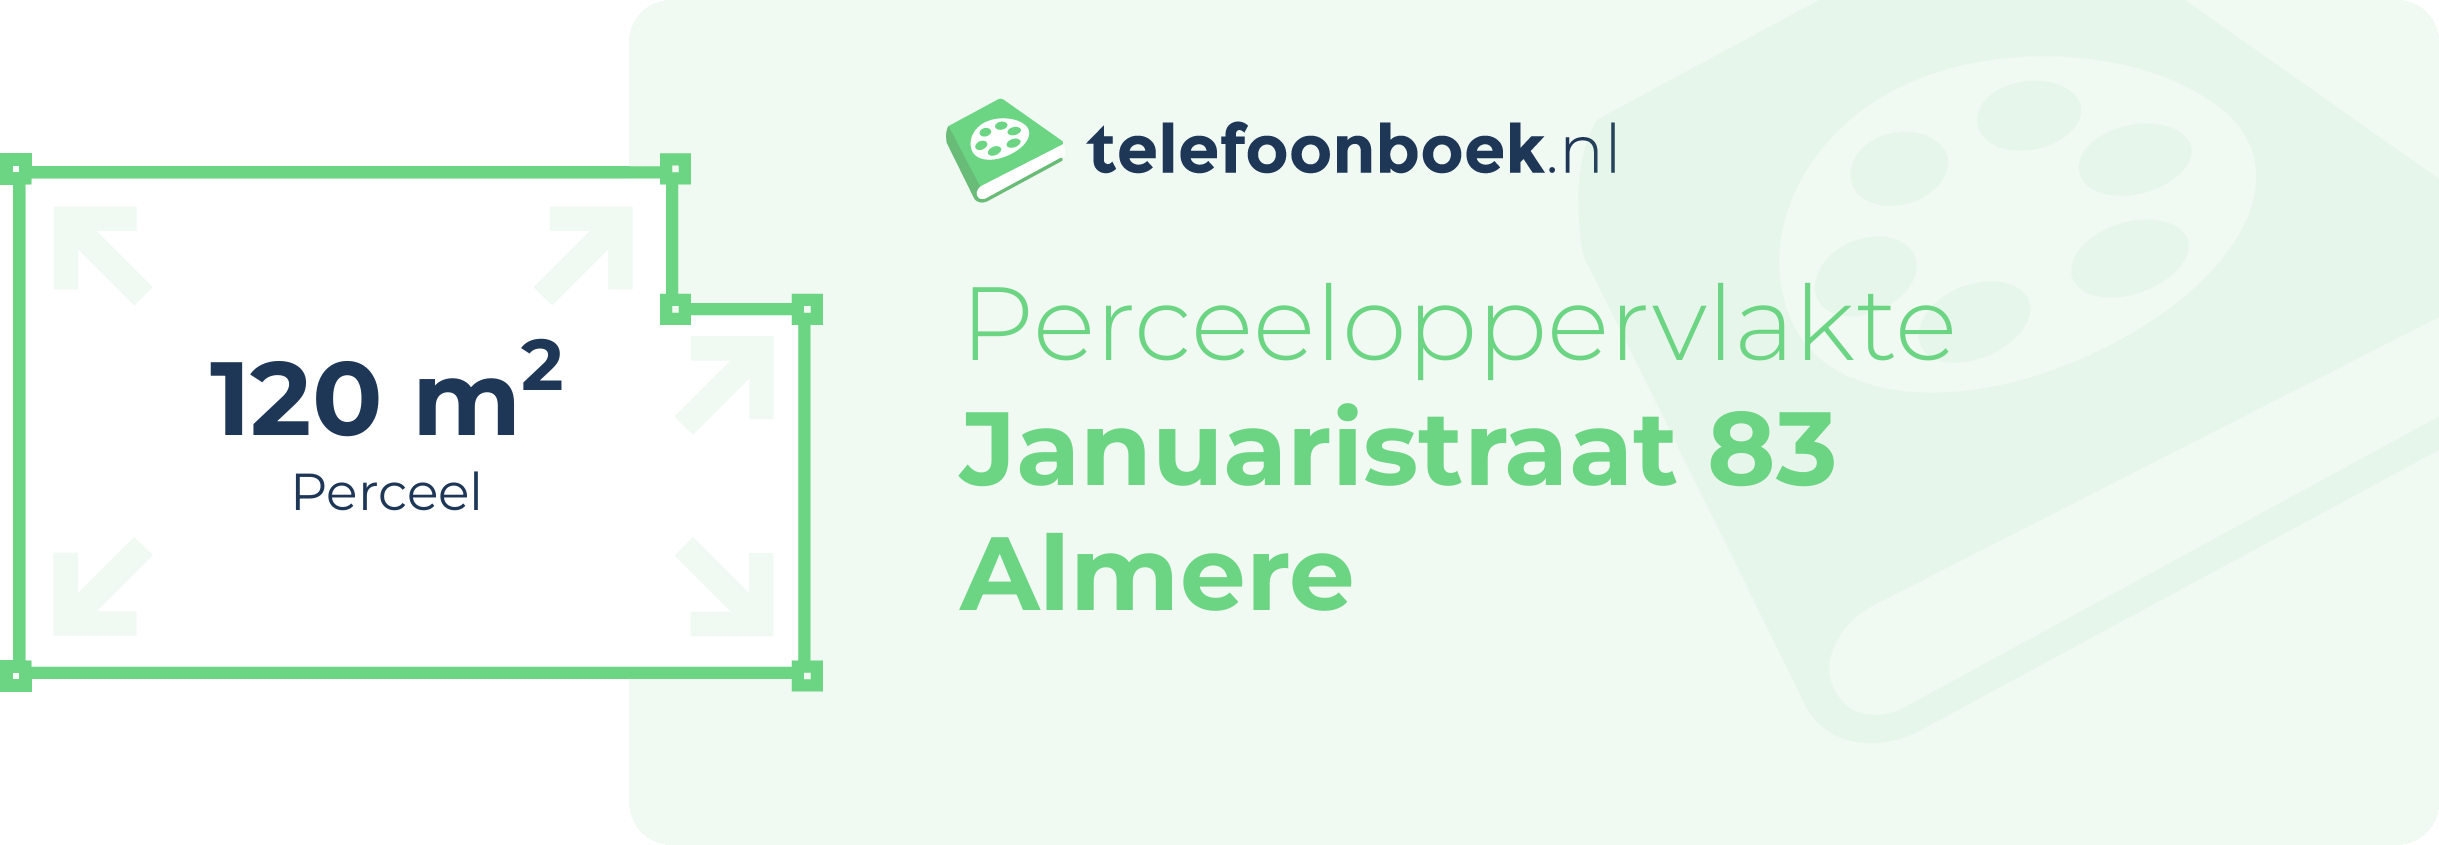 Perceeloppervlakte Januaristraat 83 Almere